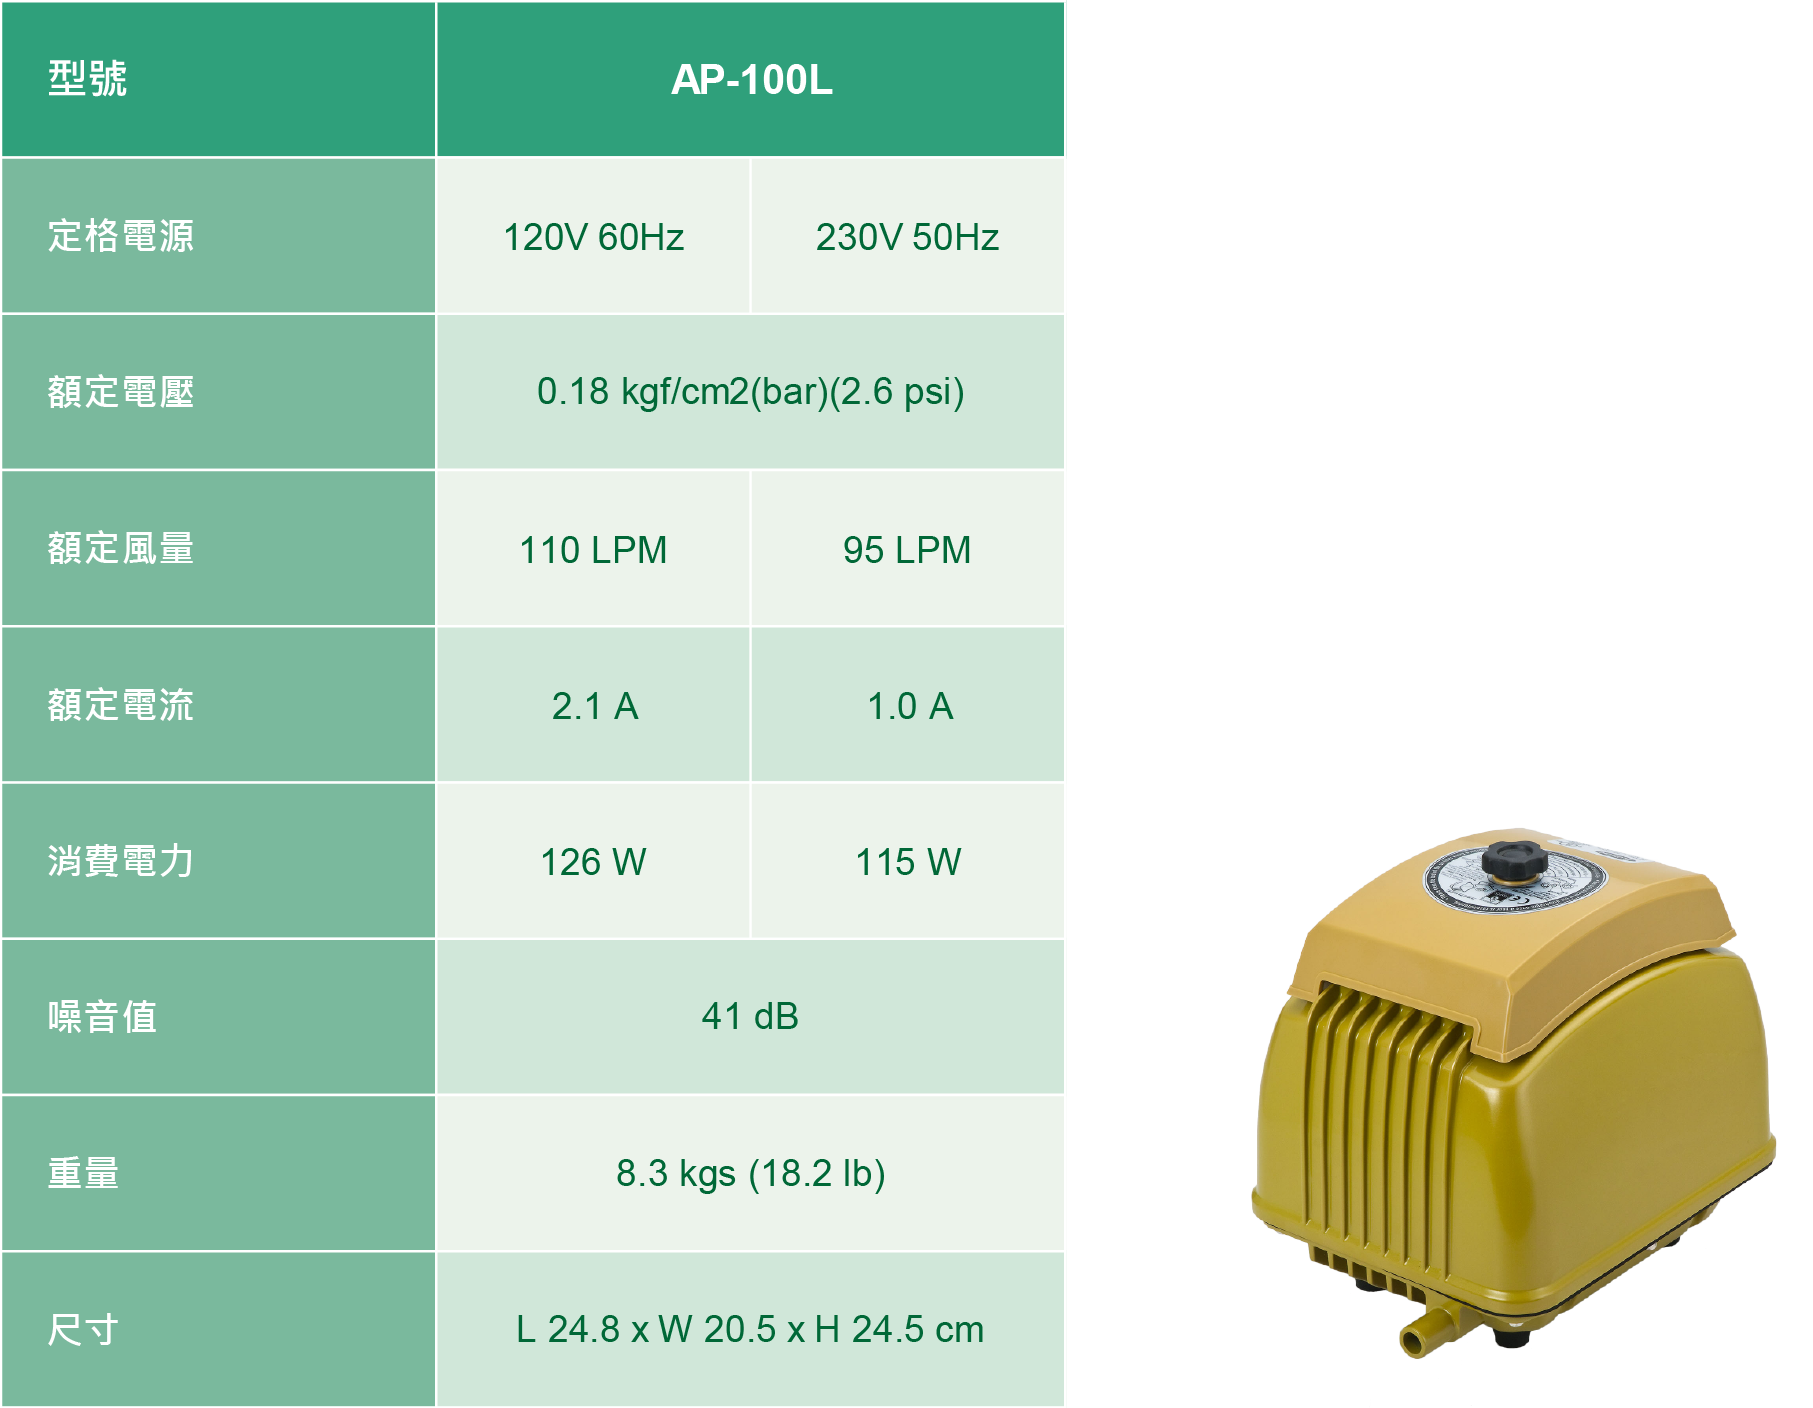 Linear Air Pumps AP-100L Performance